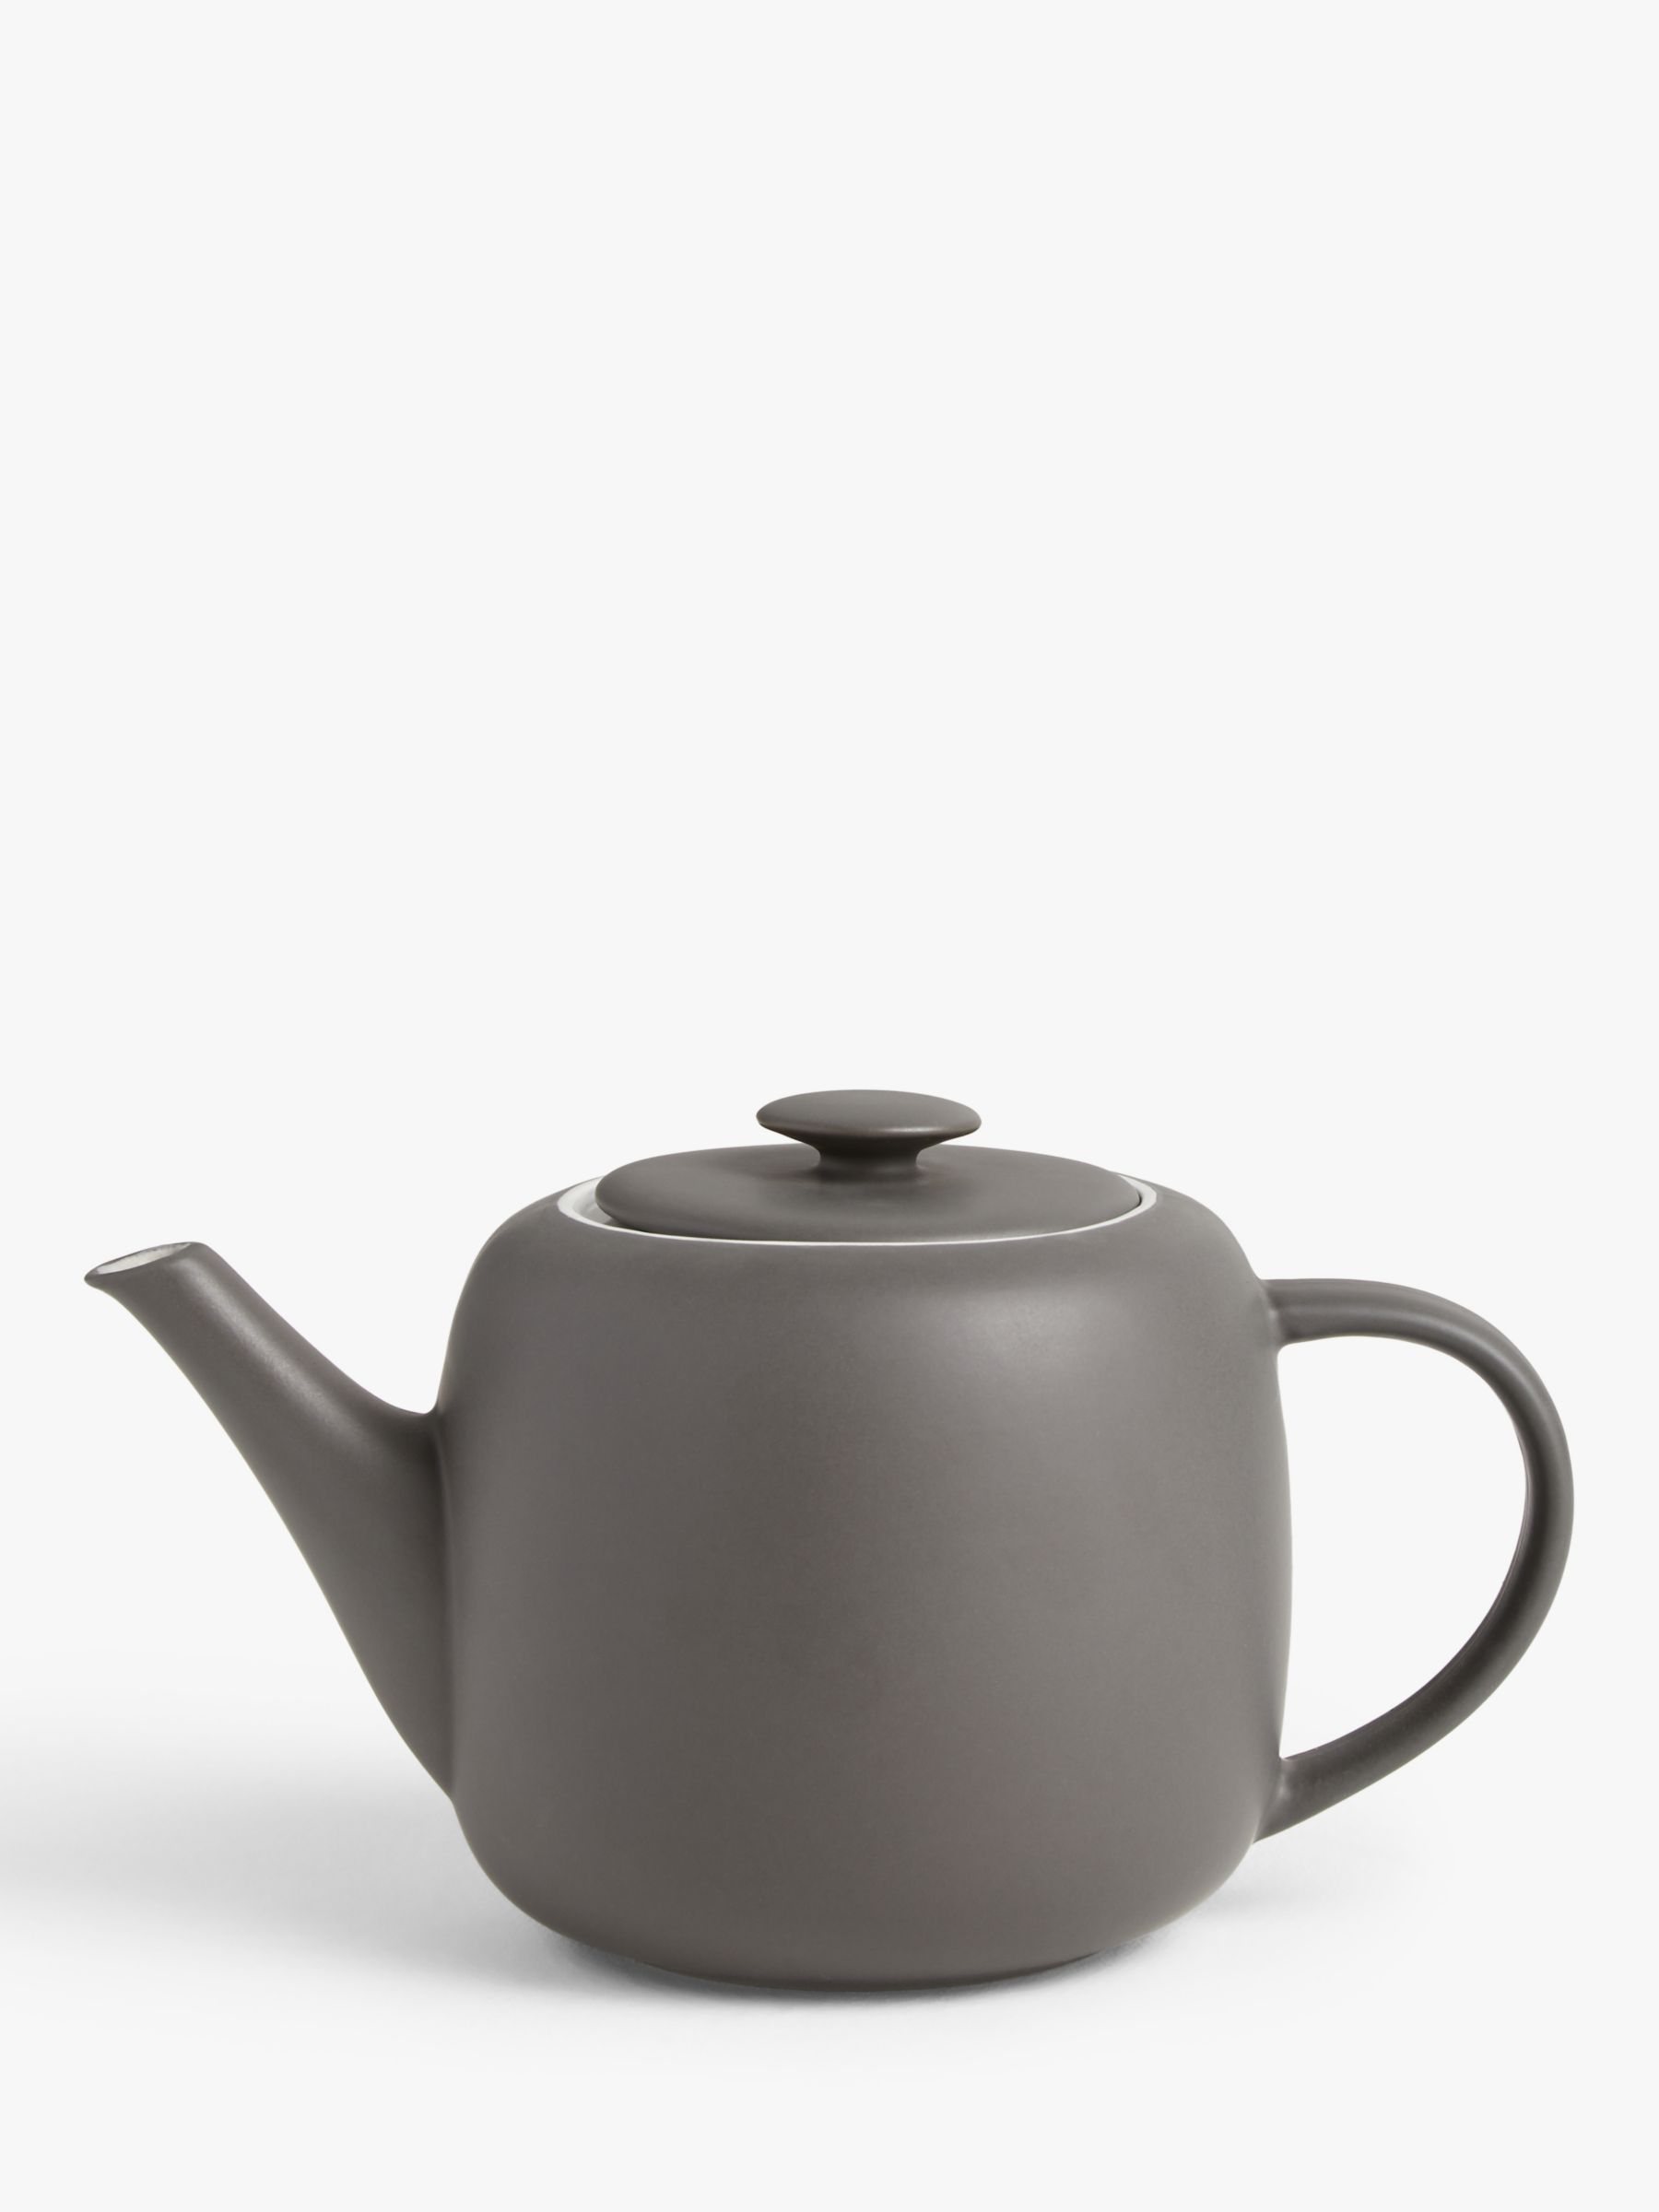 Tea Cosy John Lewis Wallflower Slate Grey Tea Pot Cozy 